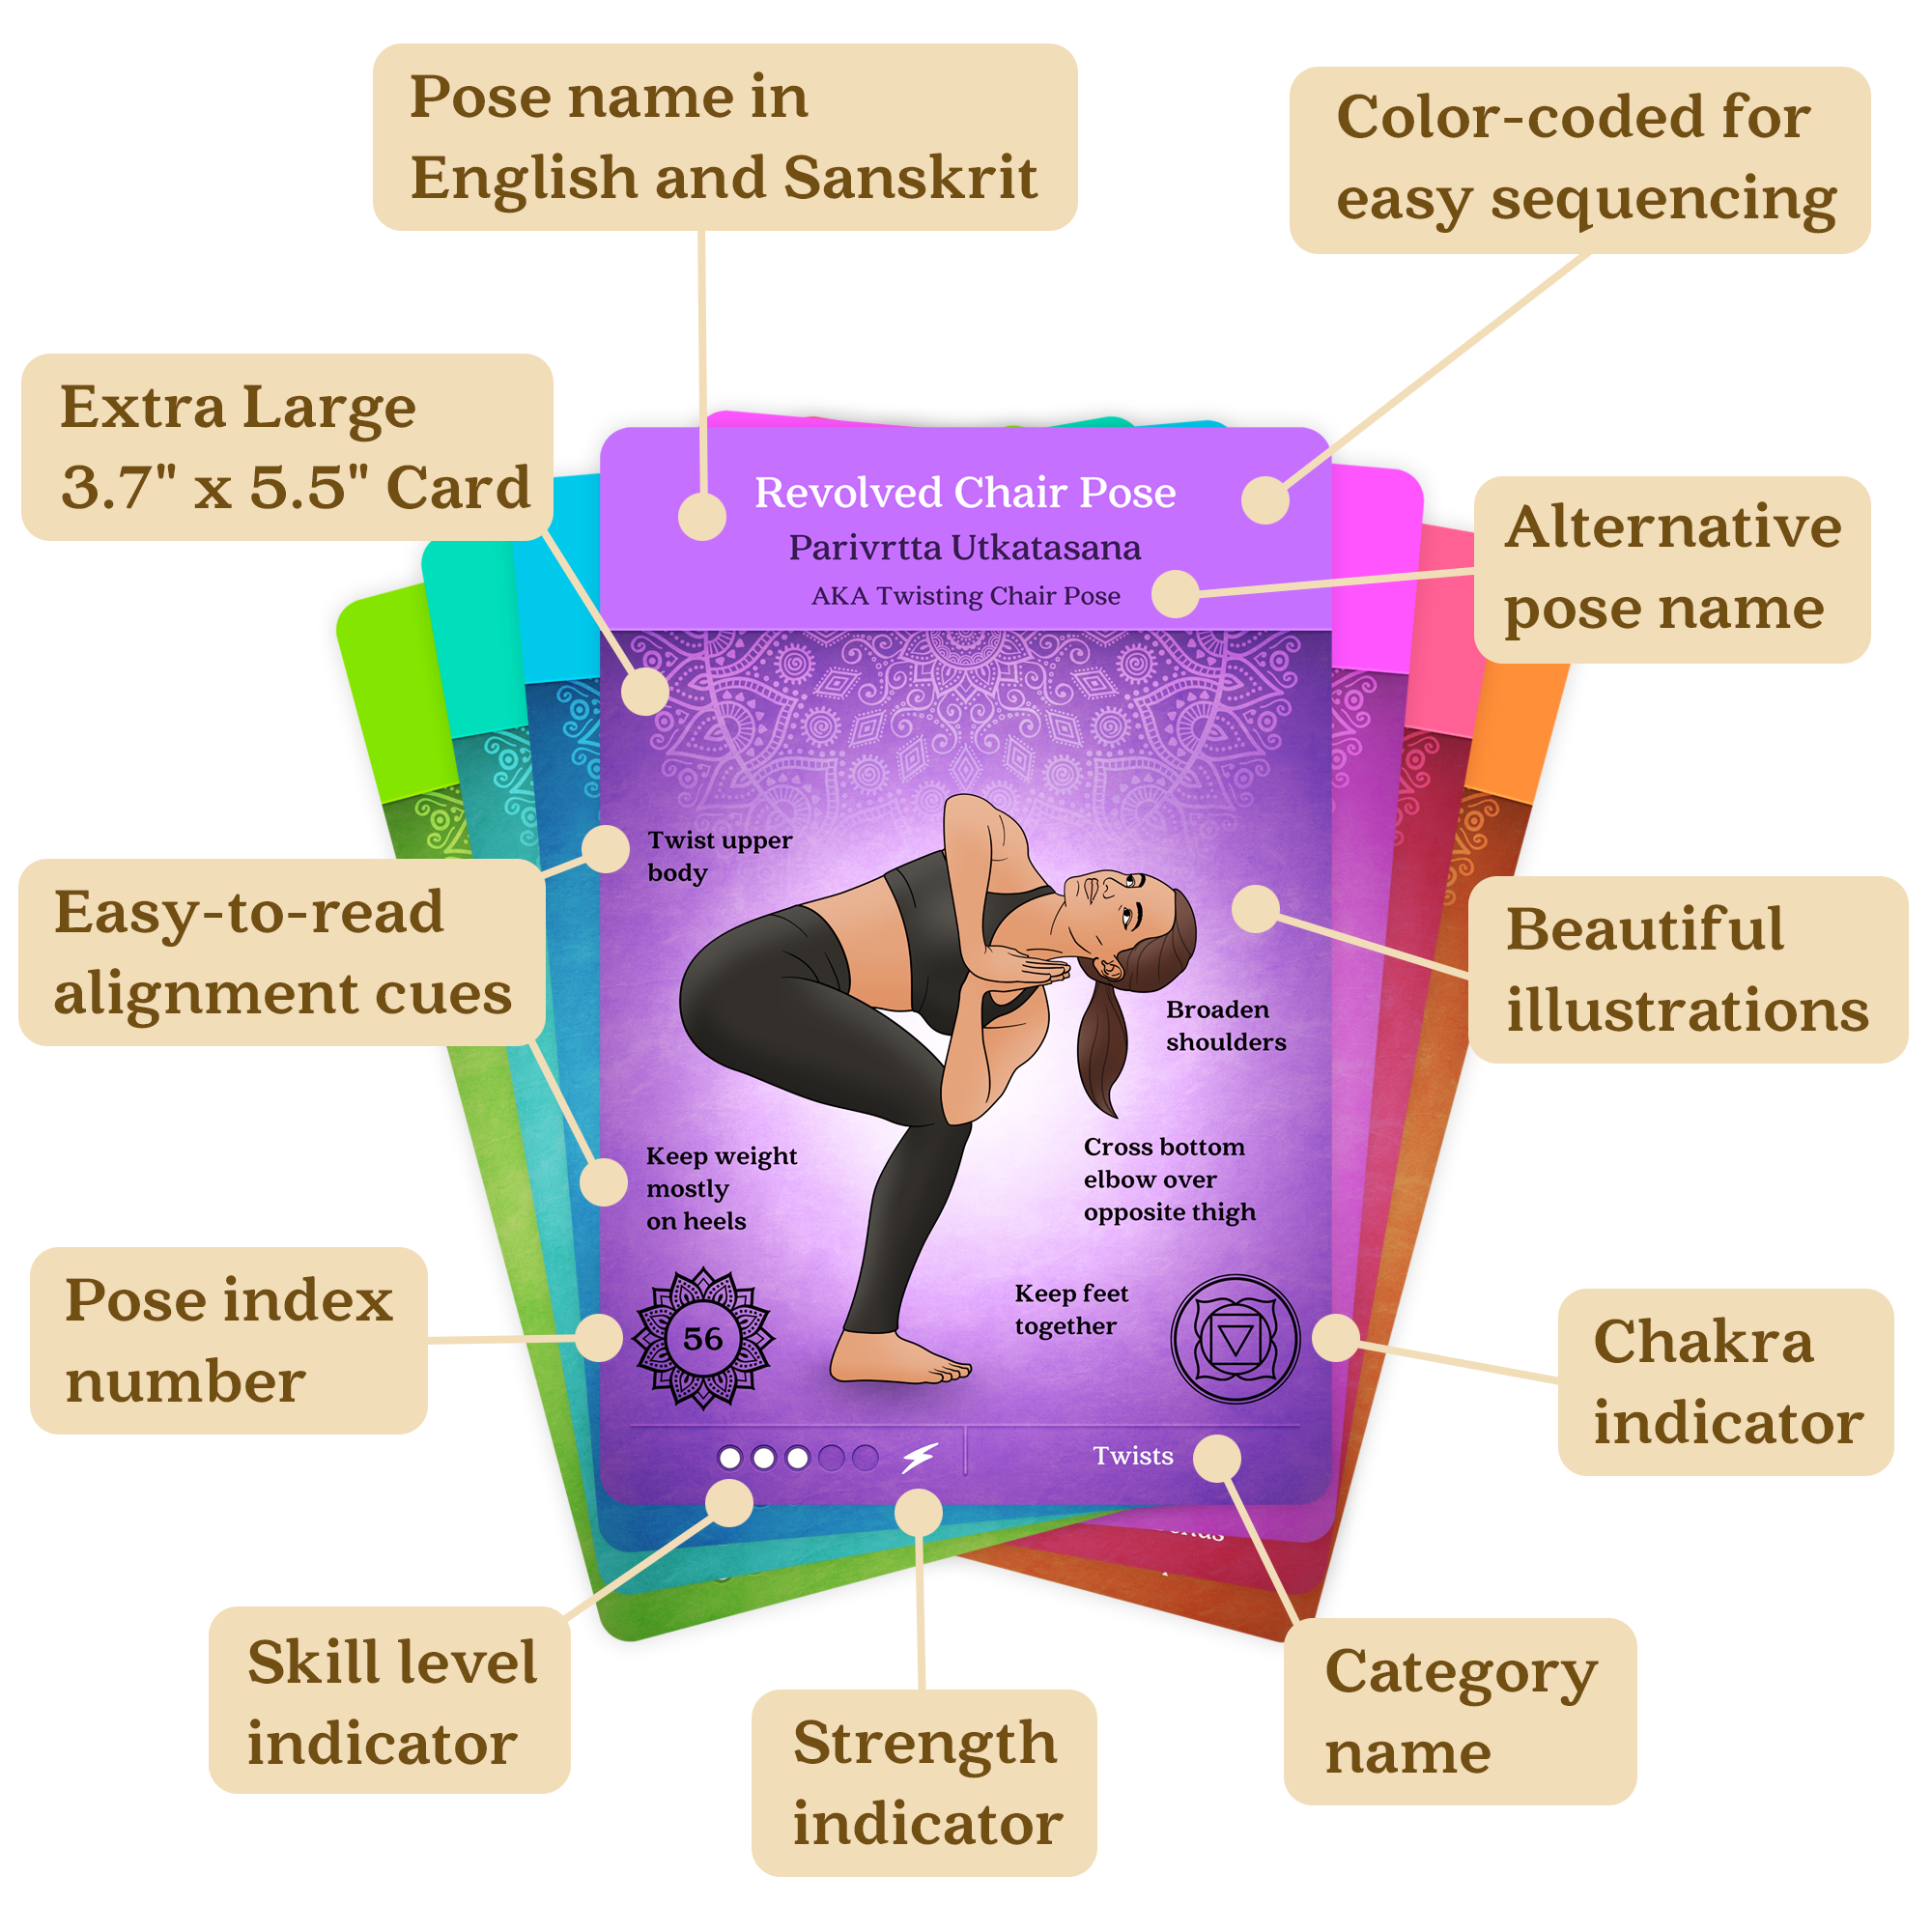 Bhujangasana Yoga (Cobra Pose) - Steps And Benefits For Healthy Life!